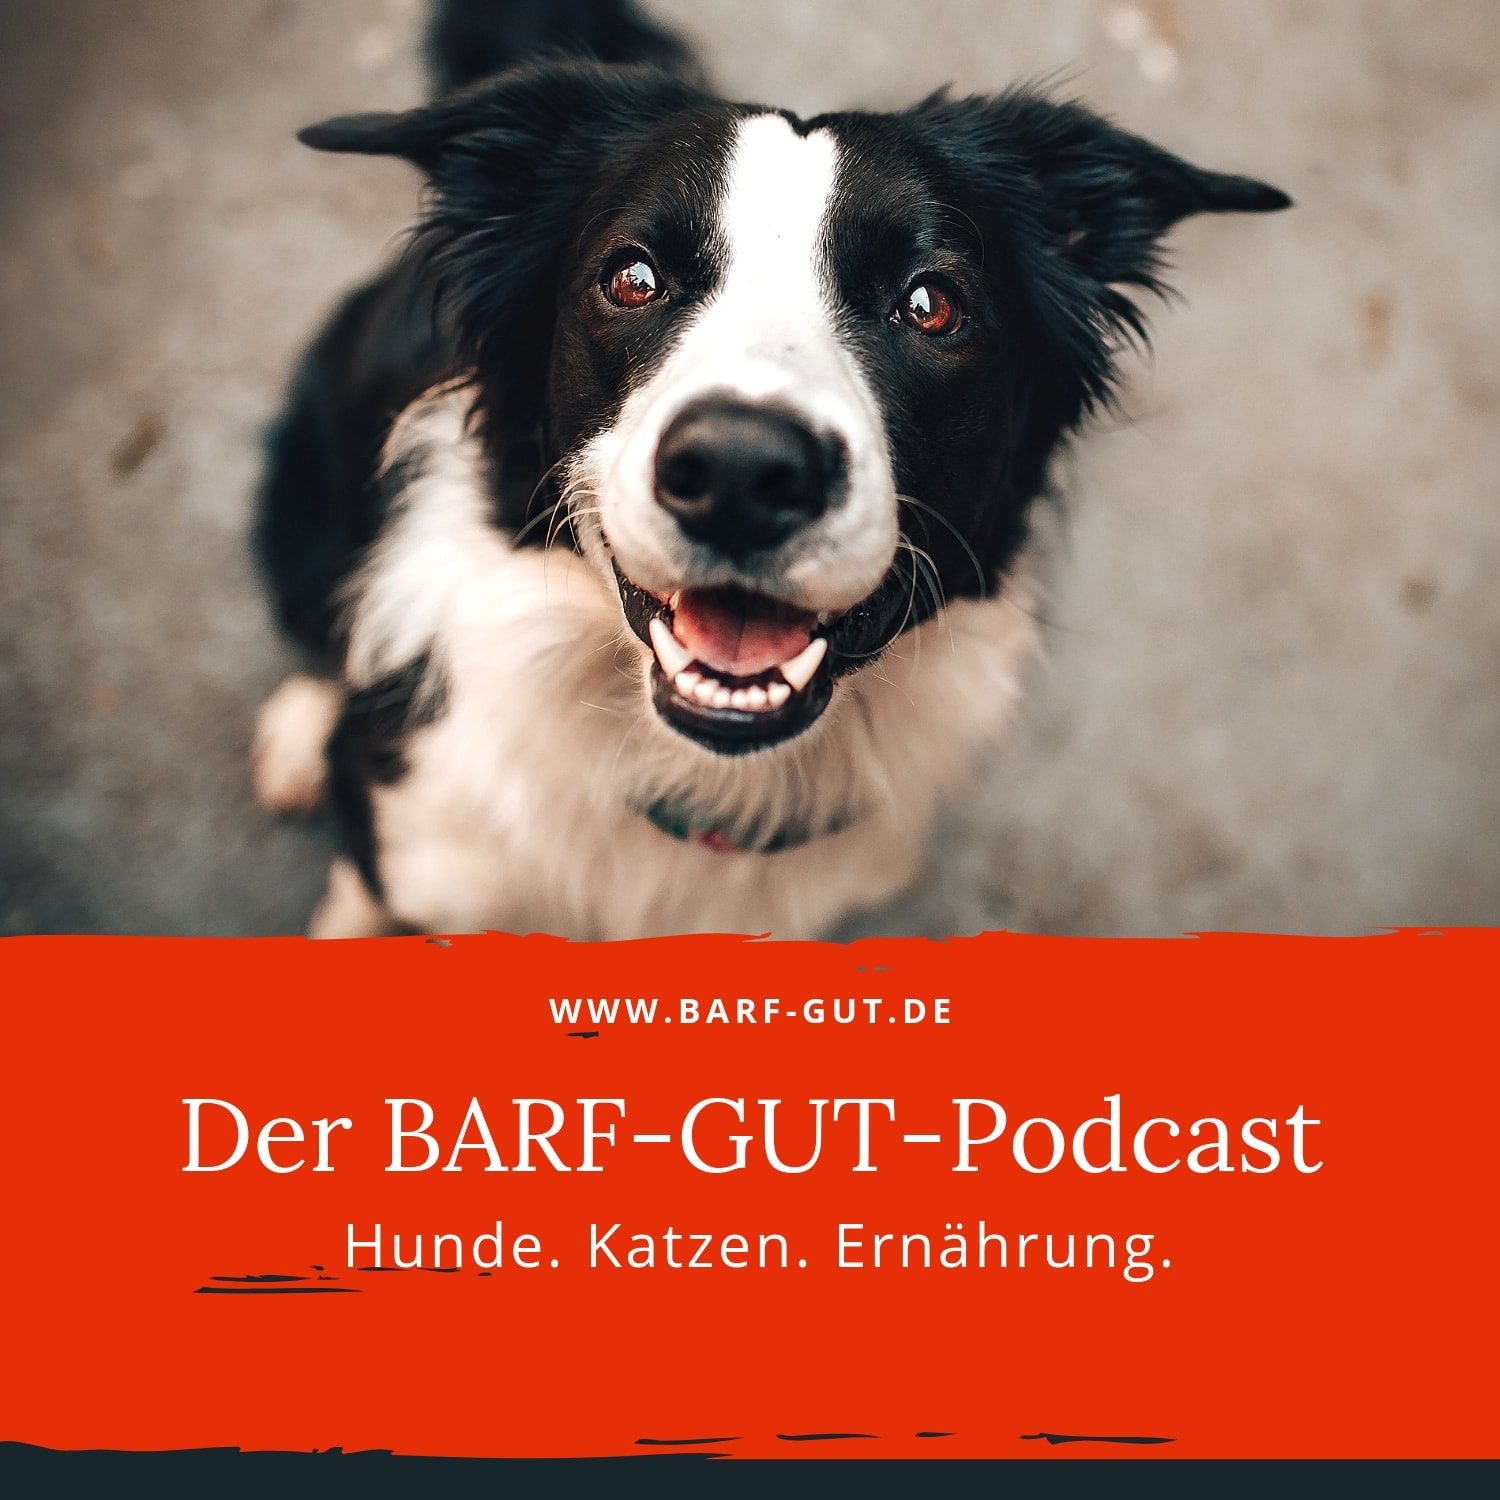 BARF-GUT - Der Podcast